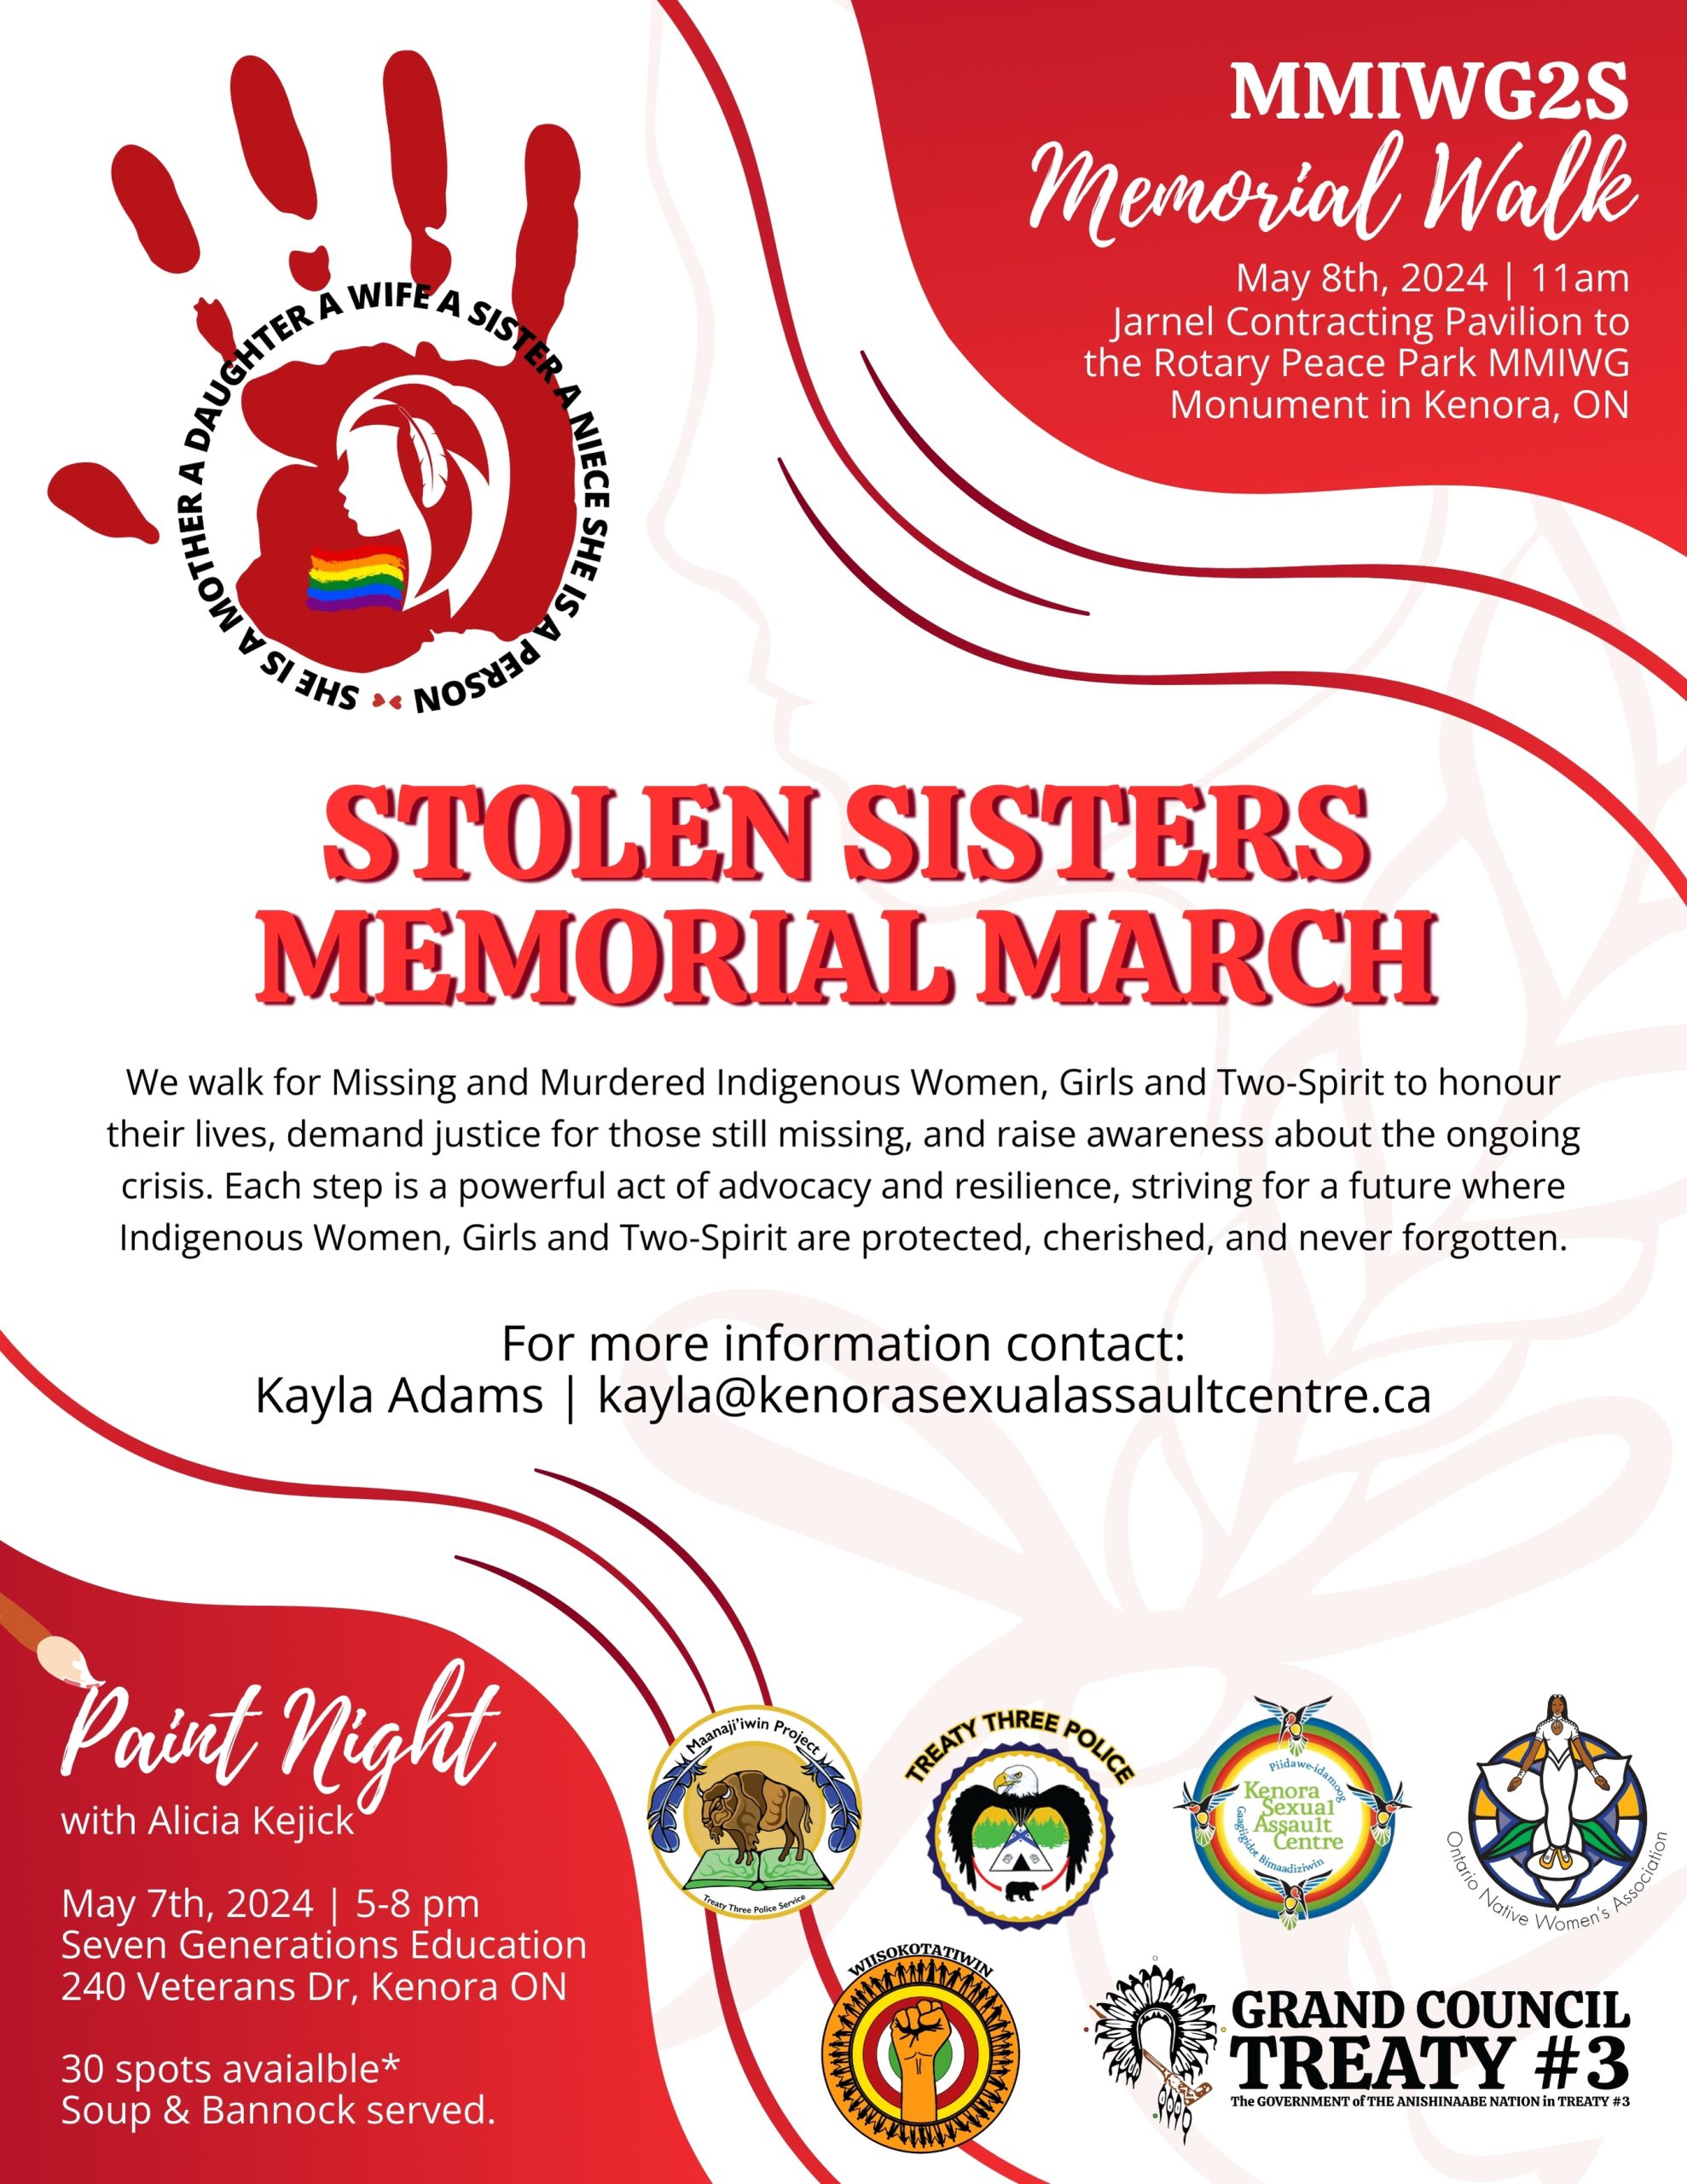 Stolen Sisters Memorial March